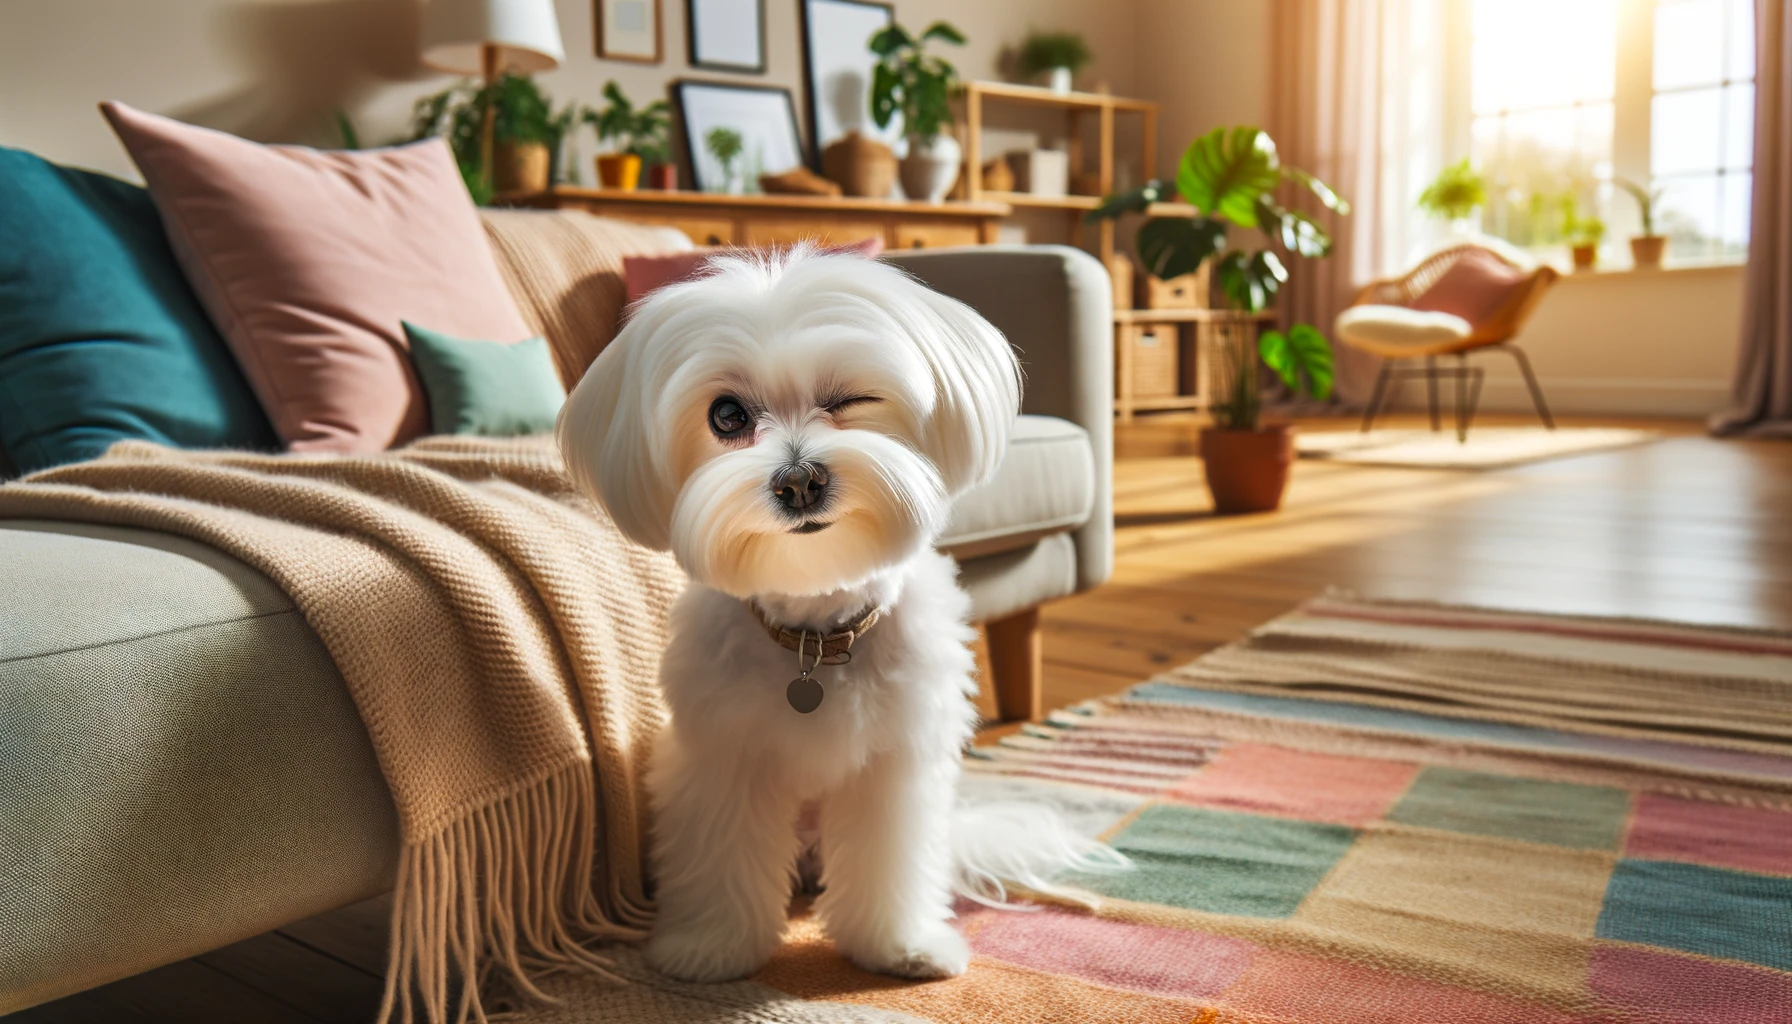 a cute maltese dog looking at the camera and winking